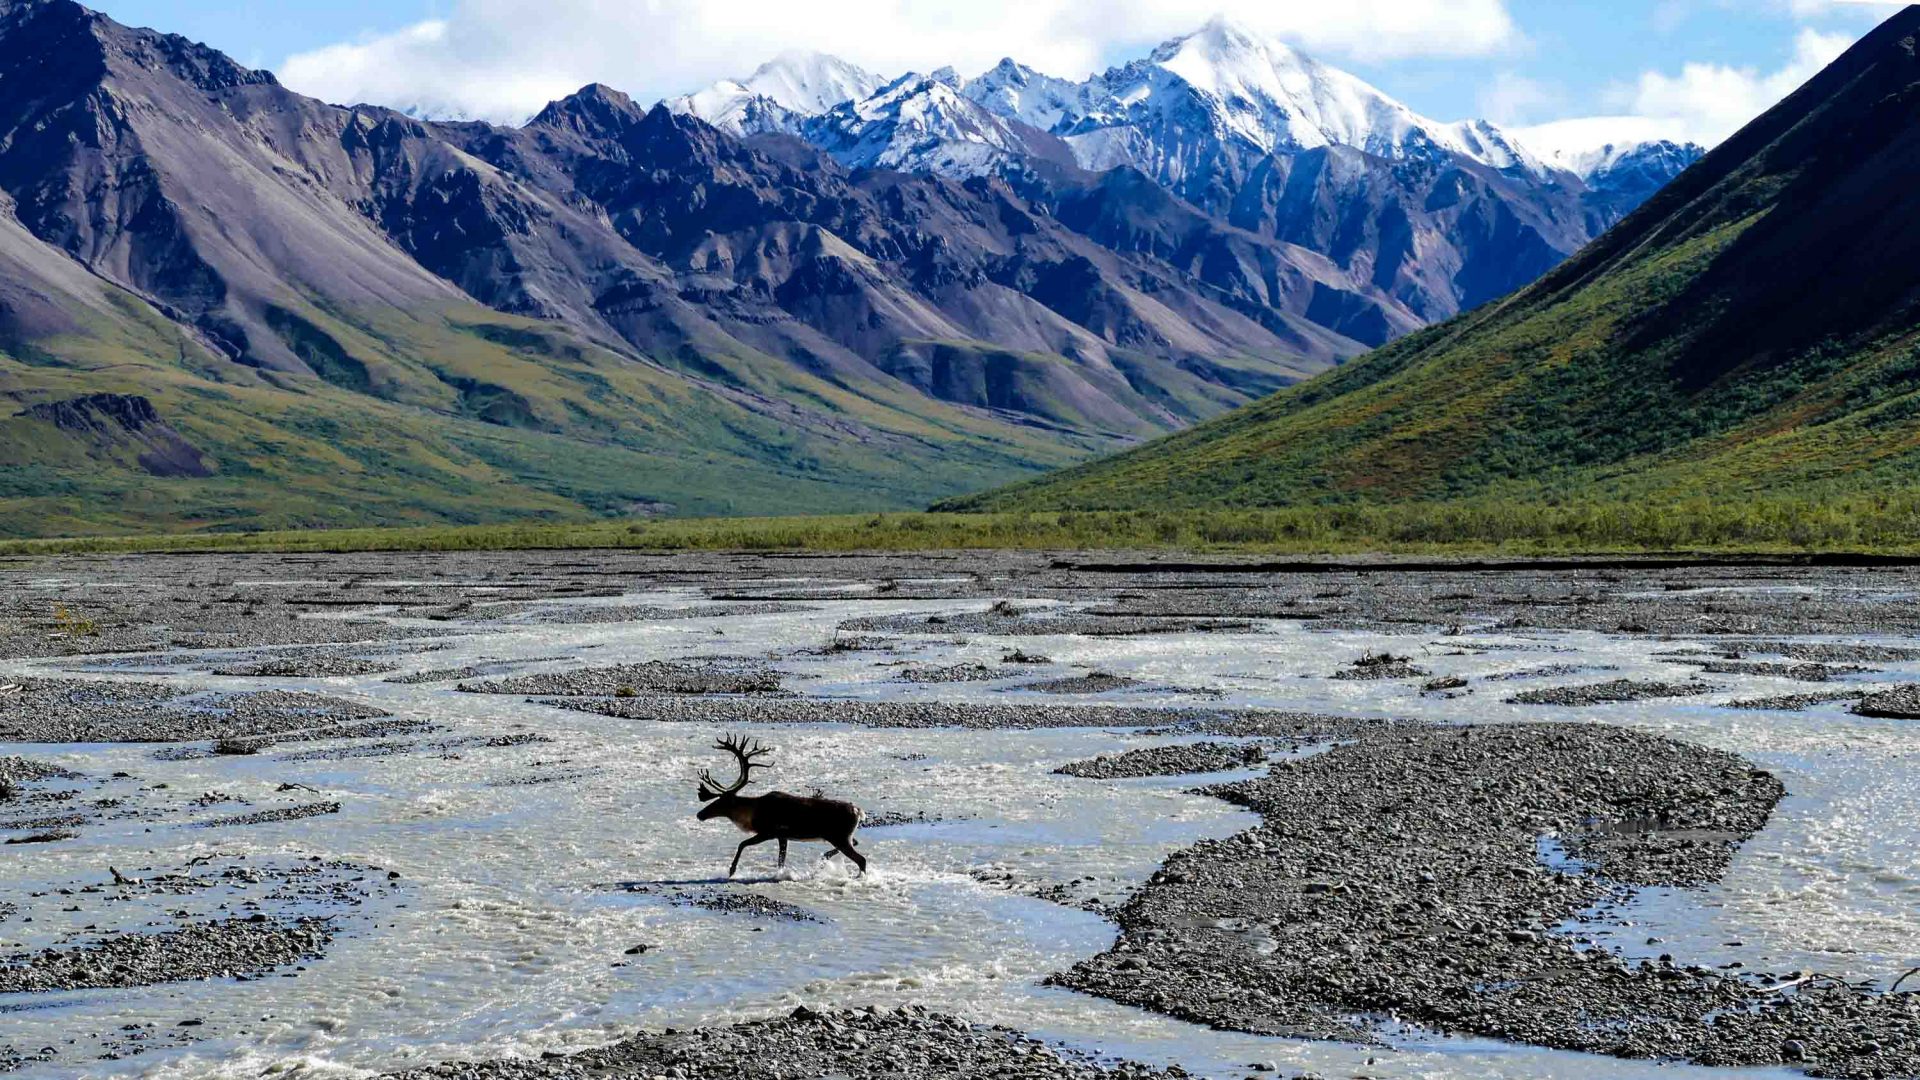 Wildlife and stunning vistas greet visitors to Denali National Park, Alaska.